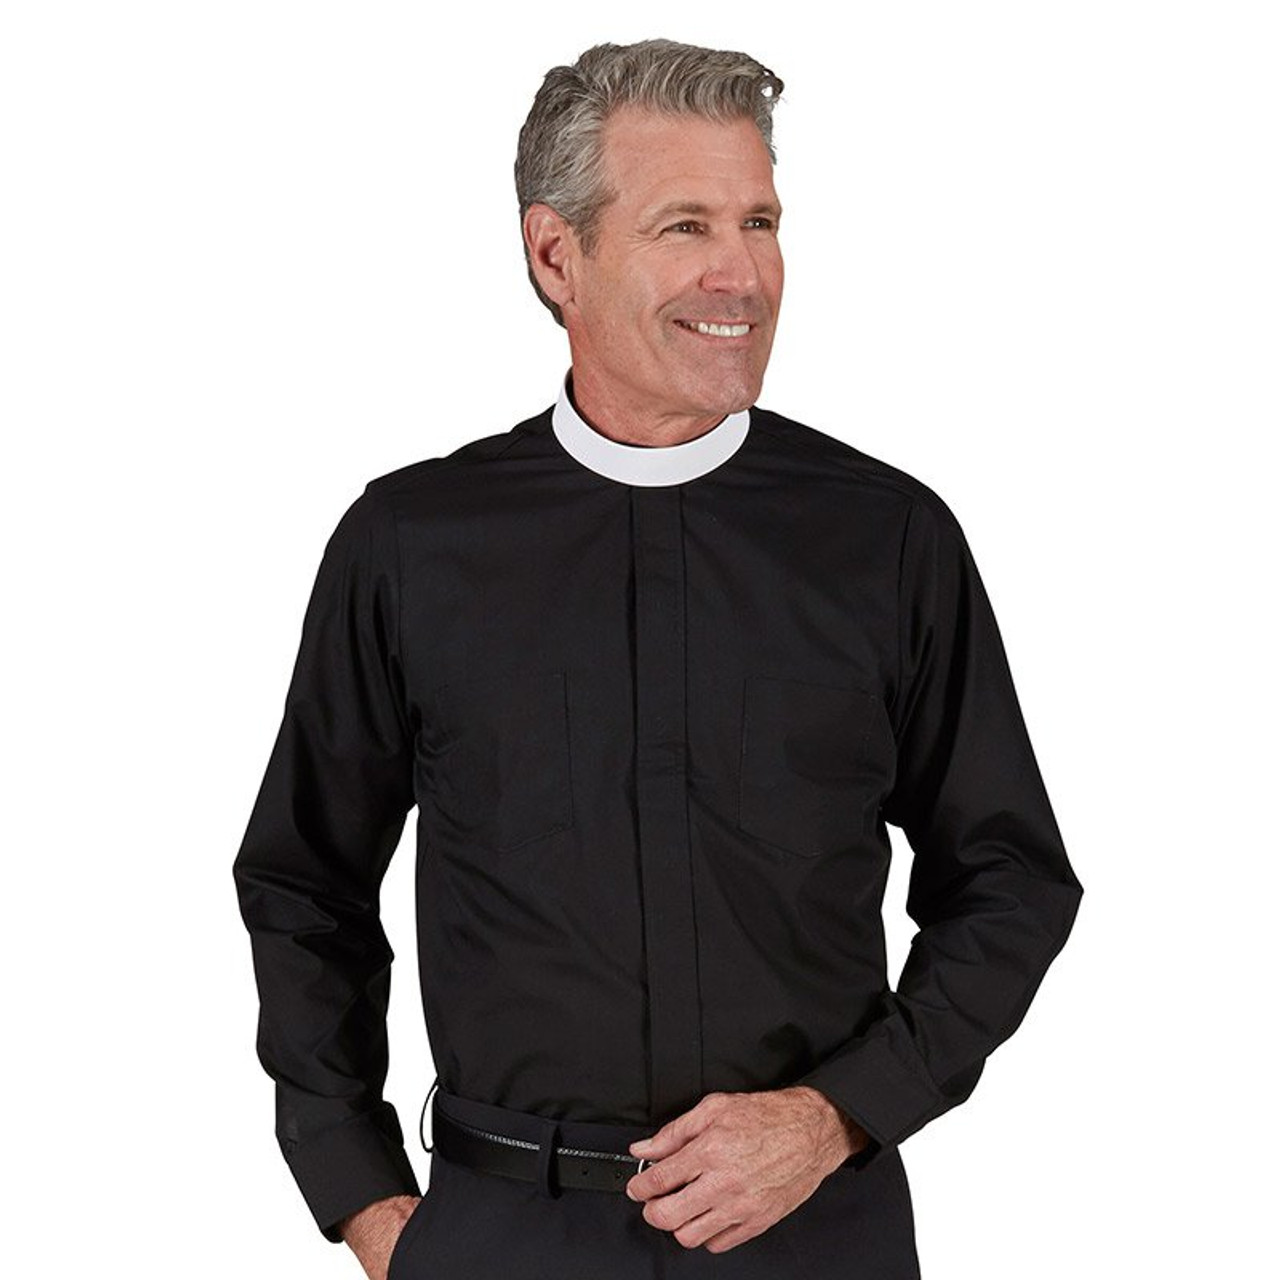 Clerical Shirt Neckband Collar Black Size 19-36/37